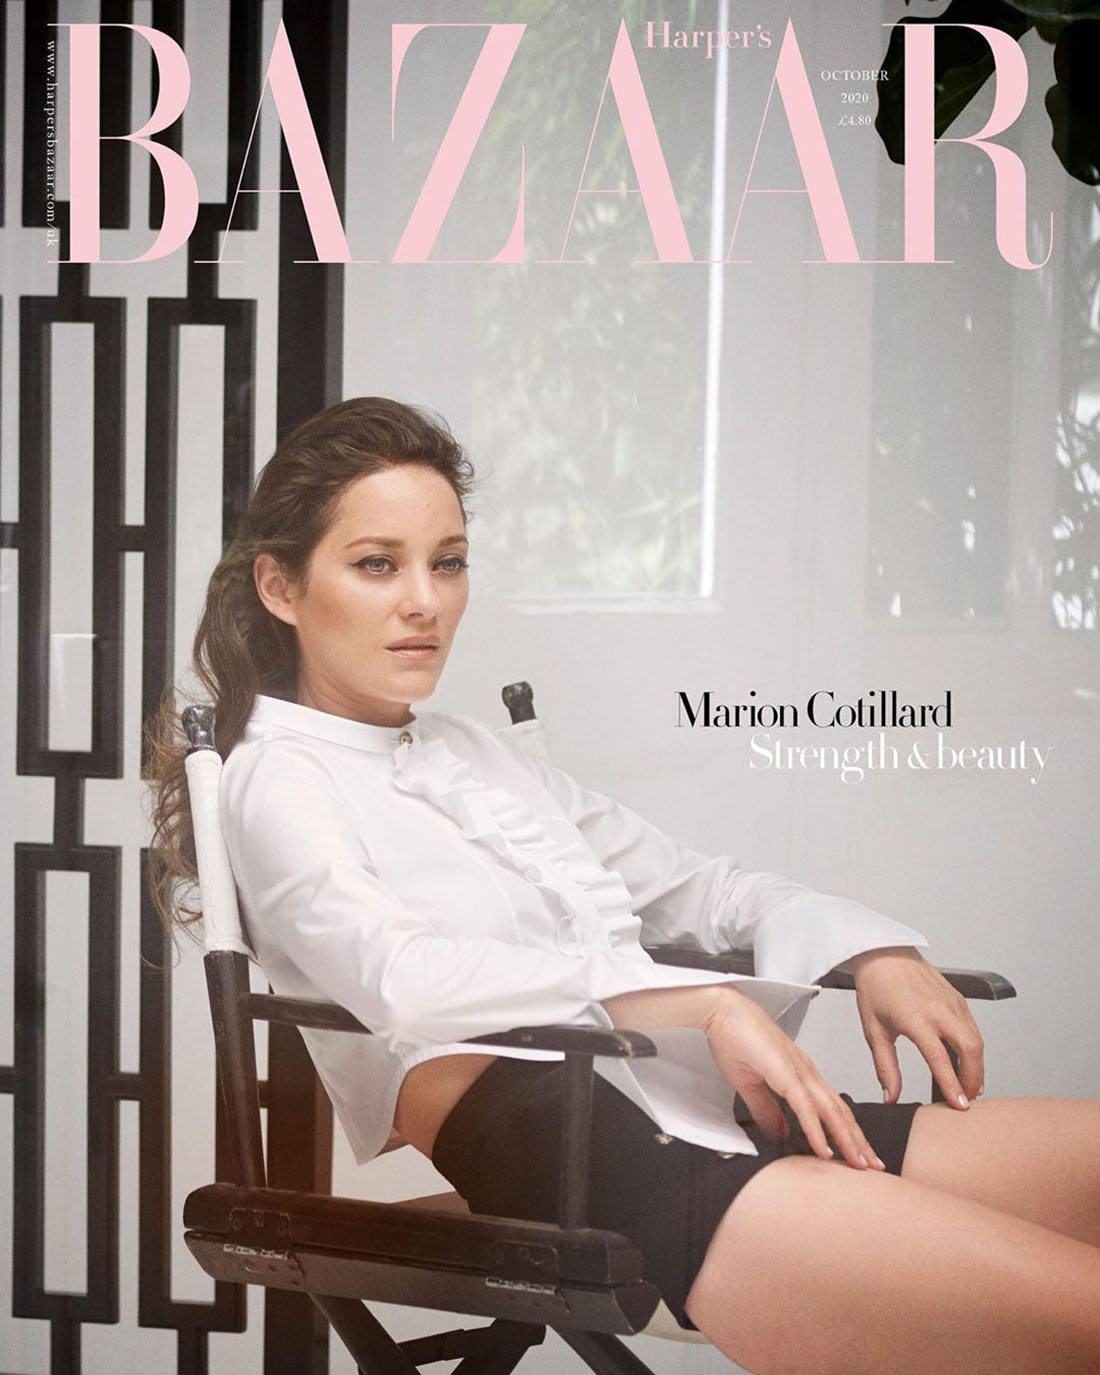 Marion Cotillard covers Harper’s Bazaar UK October 2020 by Serge Leblon